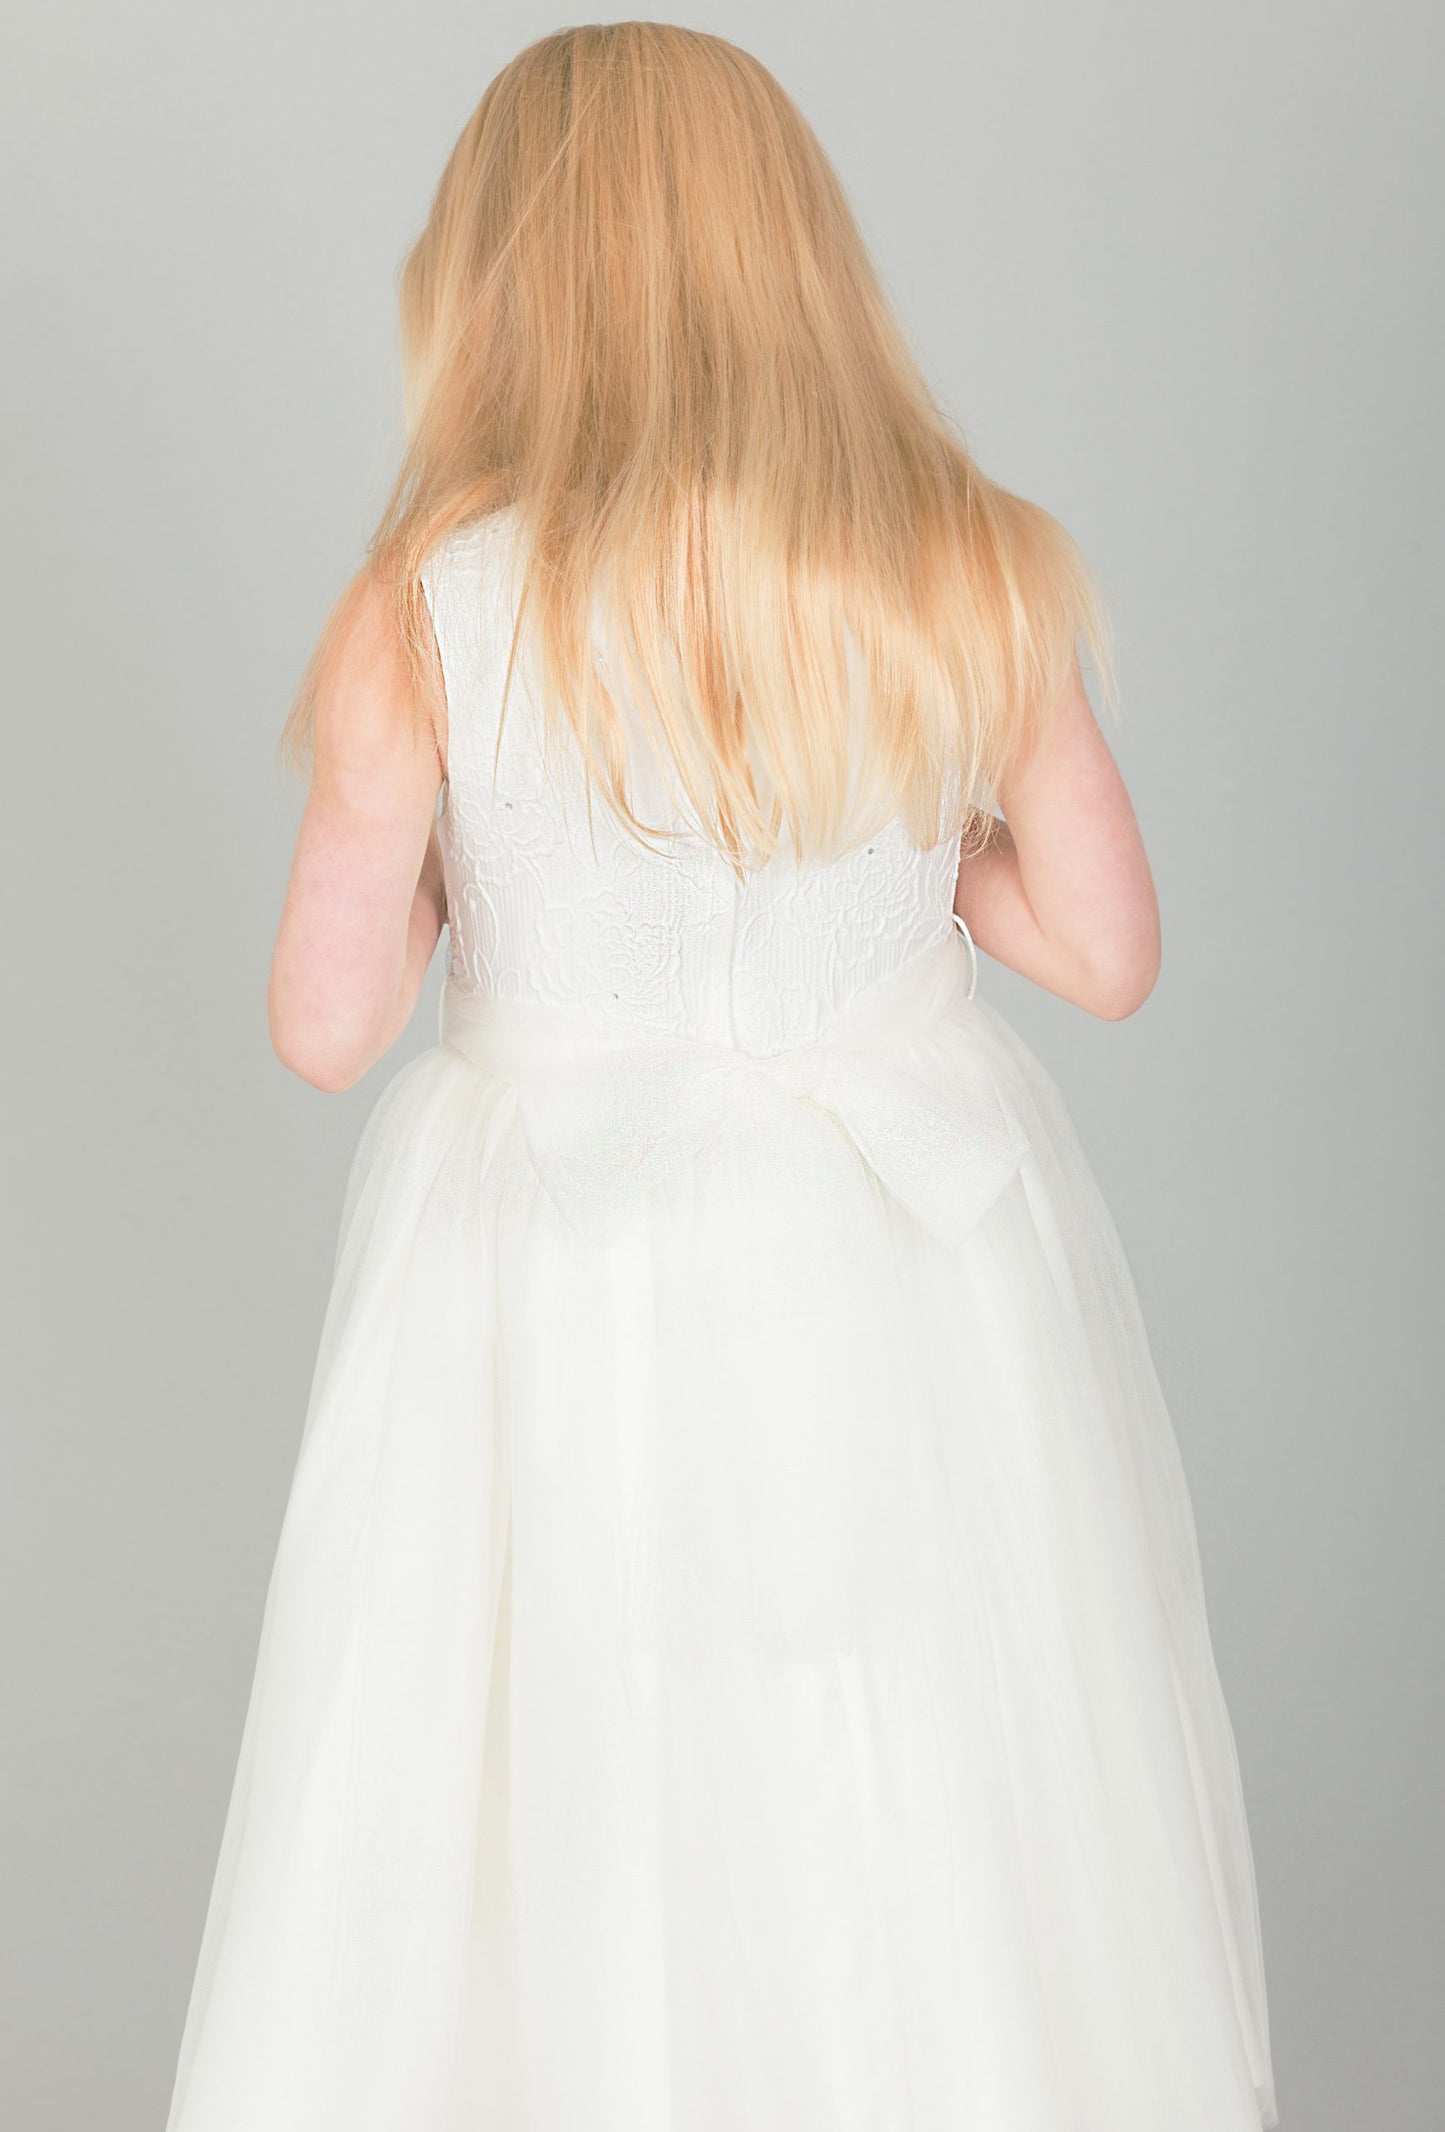 Girls White Flower diamond dress with sash belt